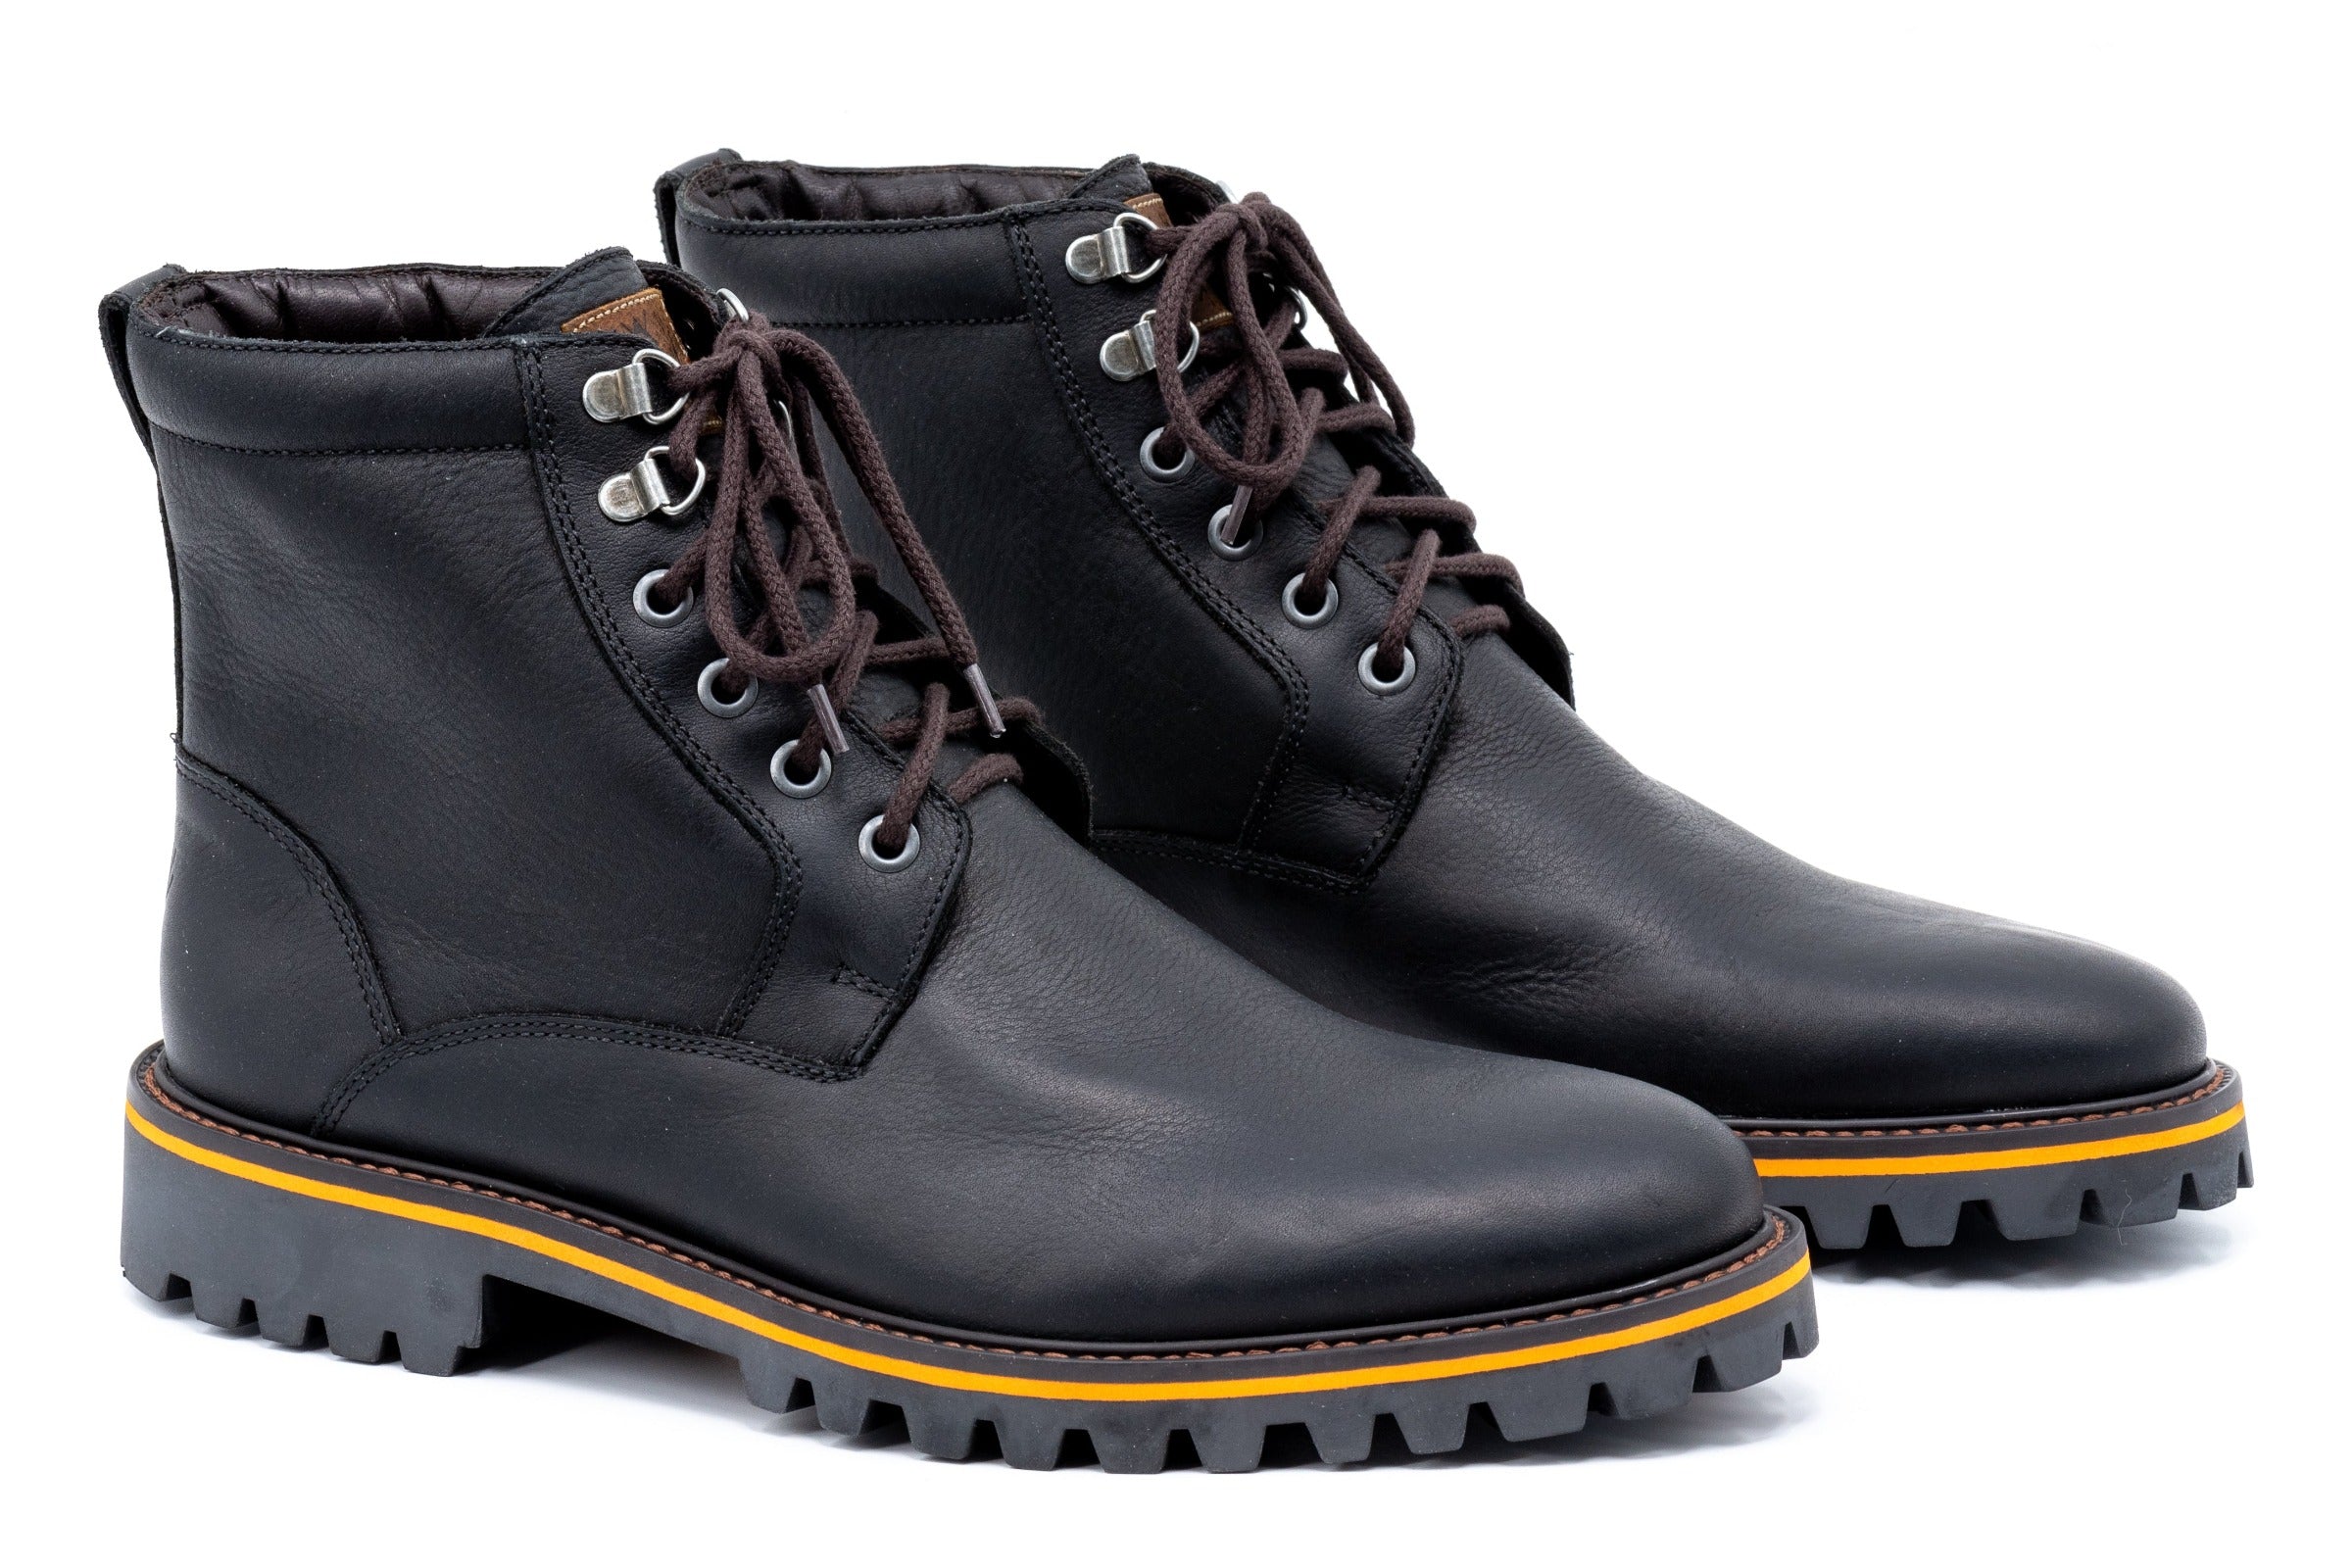 Bad Weather Saddle Leather Boots - Black